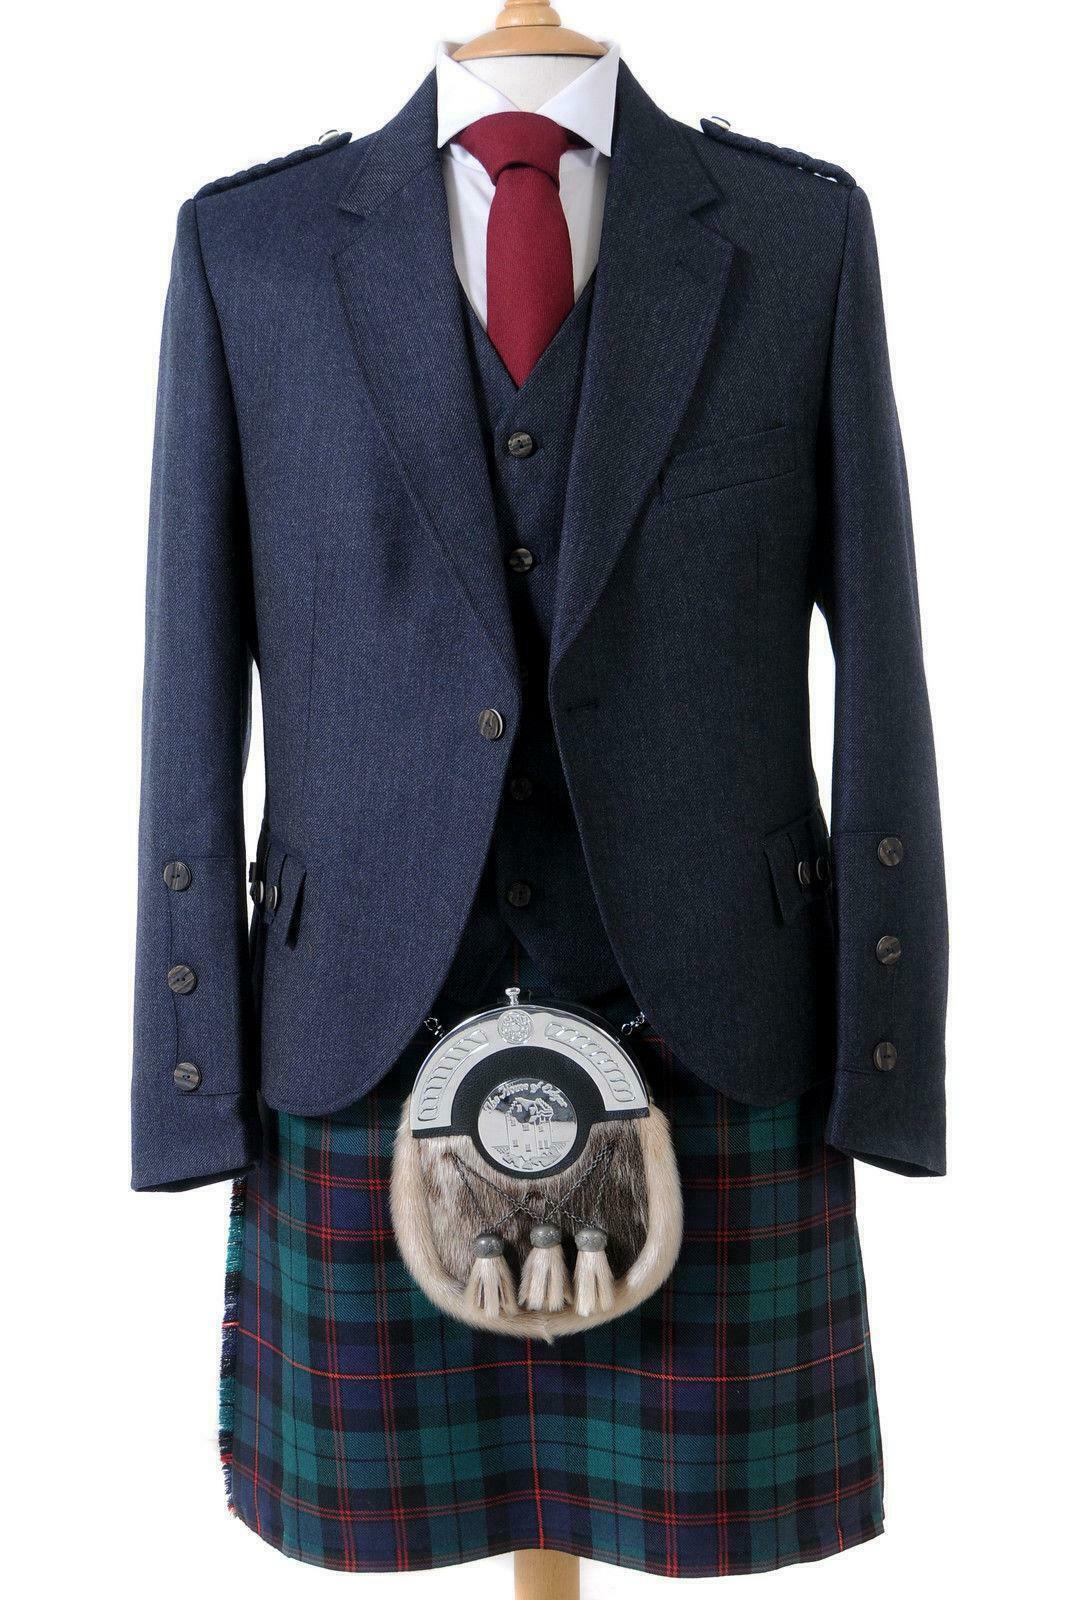 Crail Highland Jacket and Waistcoat in Midnight Blue Arrochar Tweed ...